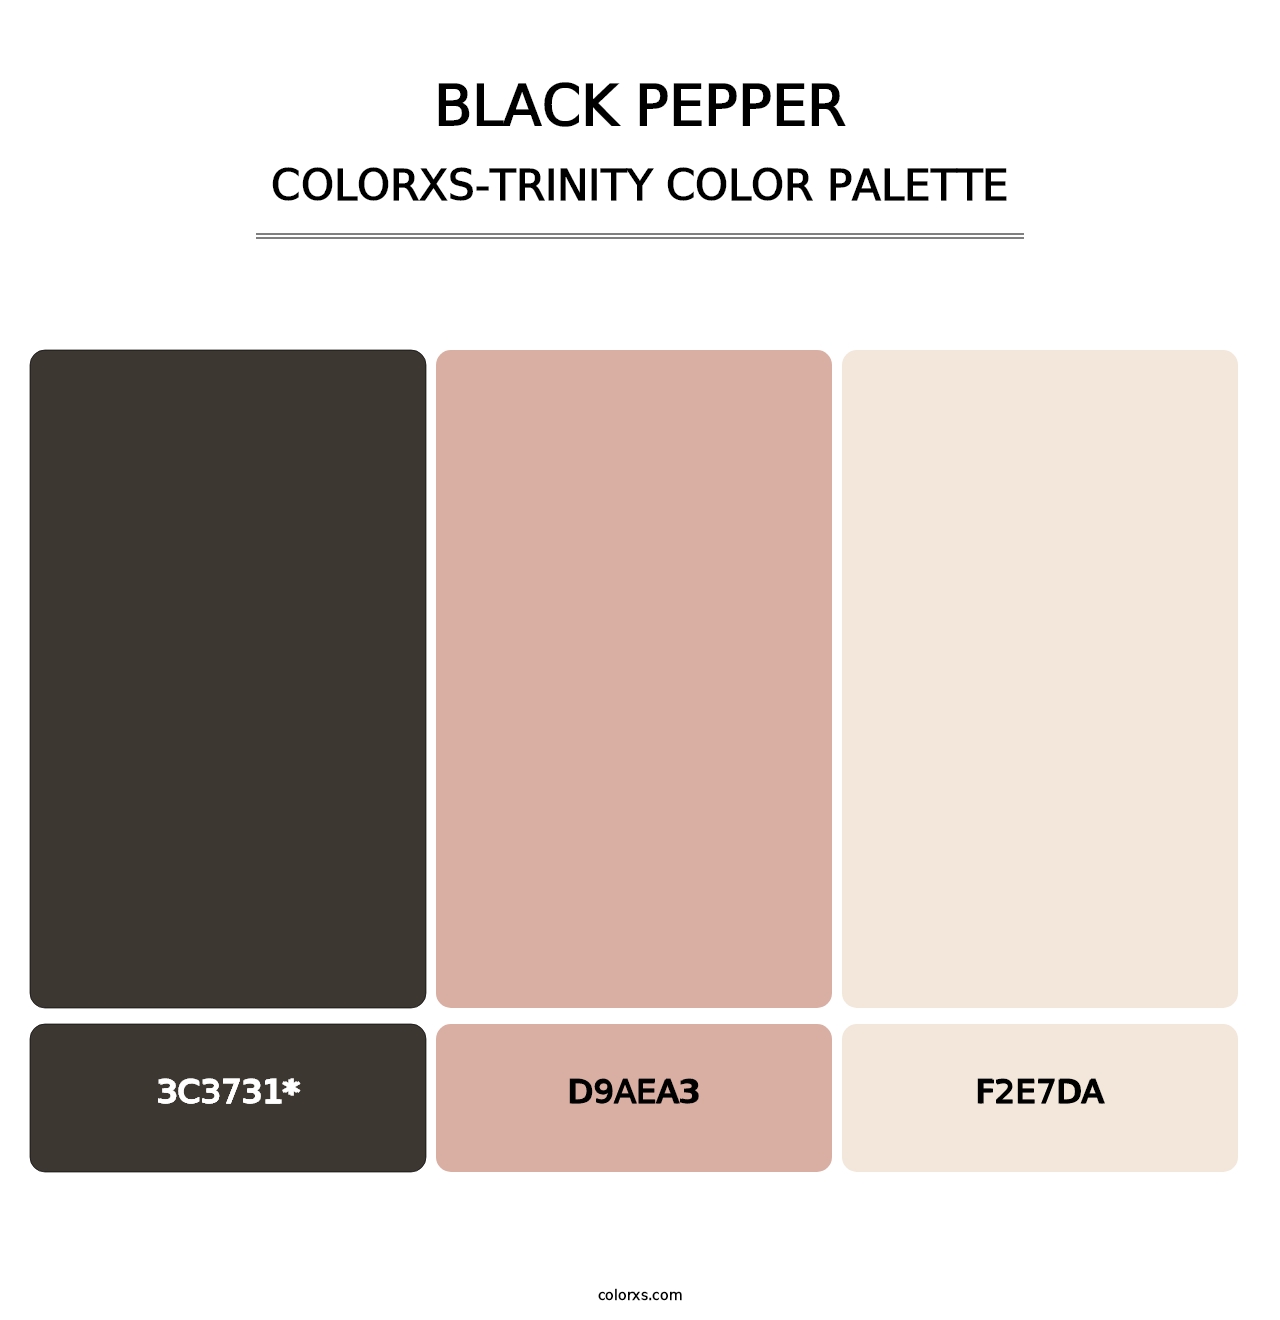 Black Pepper - Colorxs Trinity Palette